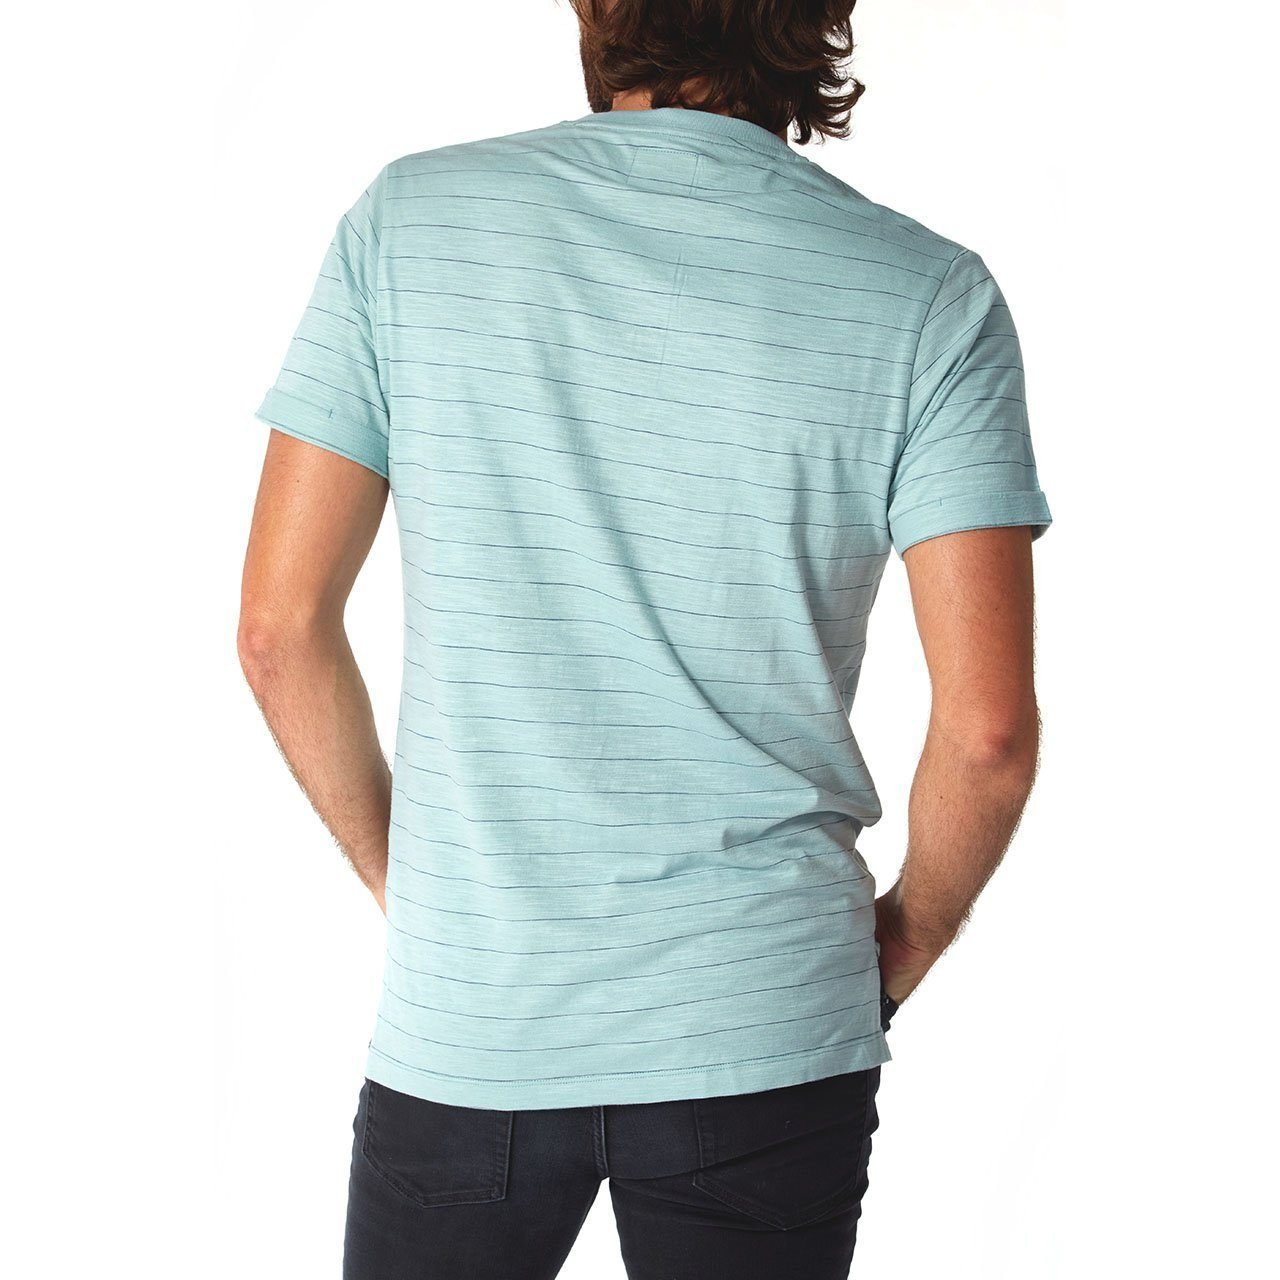 PX Clothing Men's Wade Turquoise Pinstripe Short Sleeve Henley Shirt